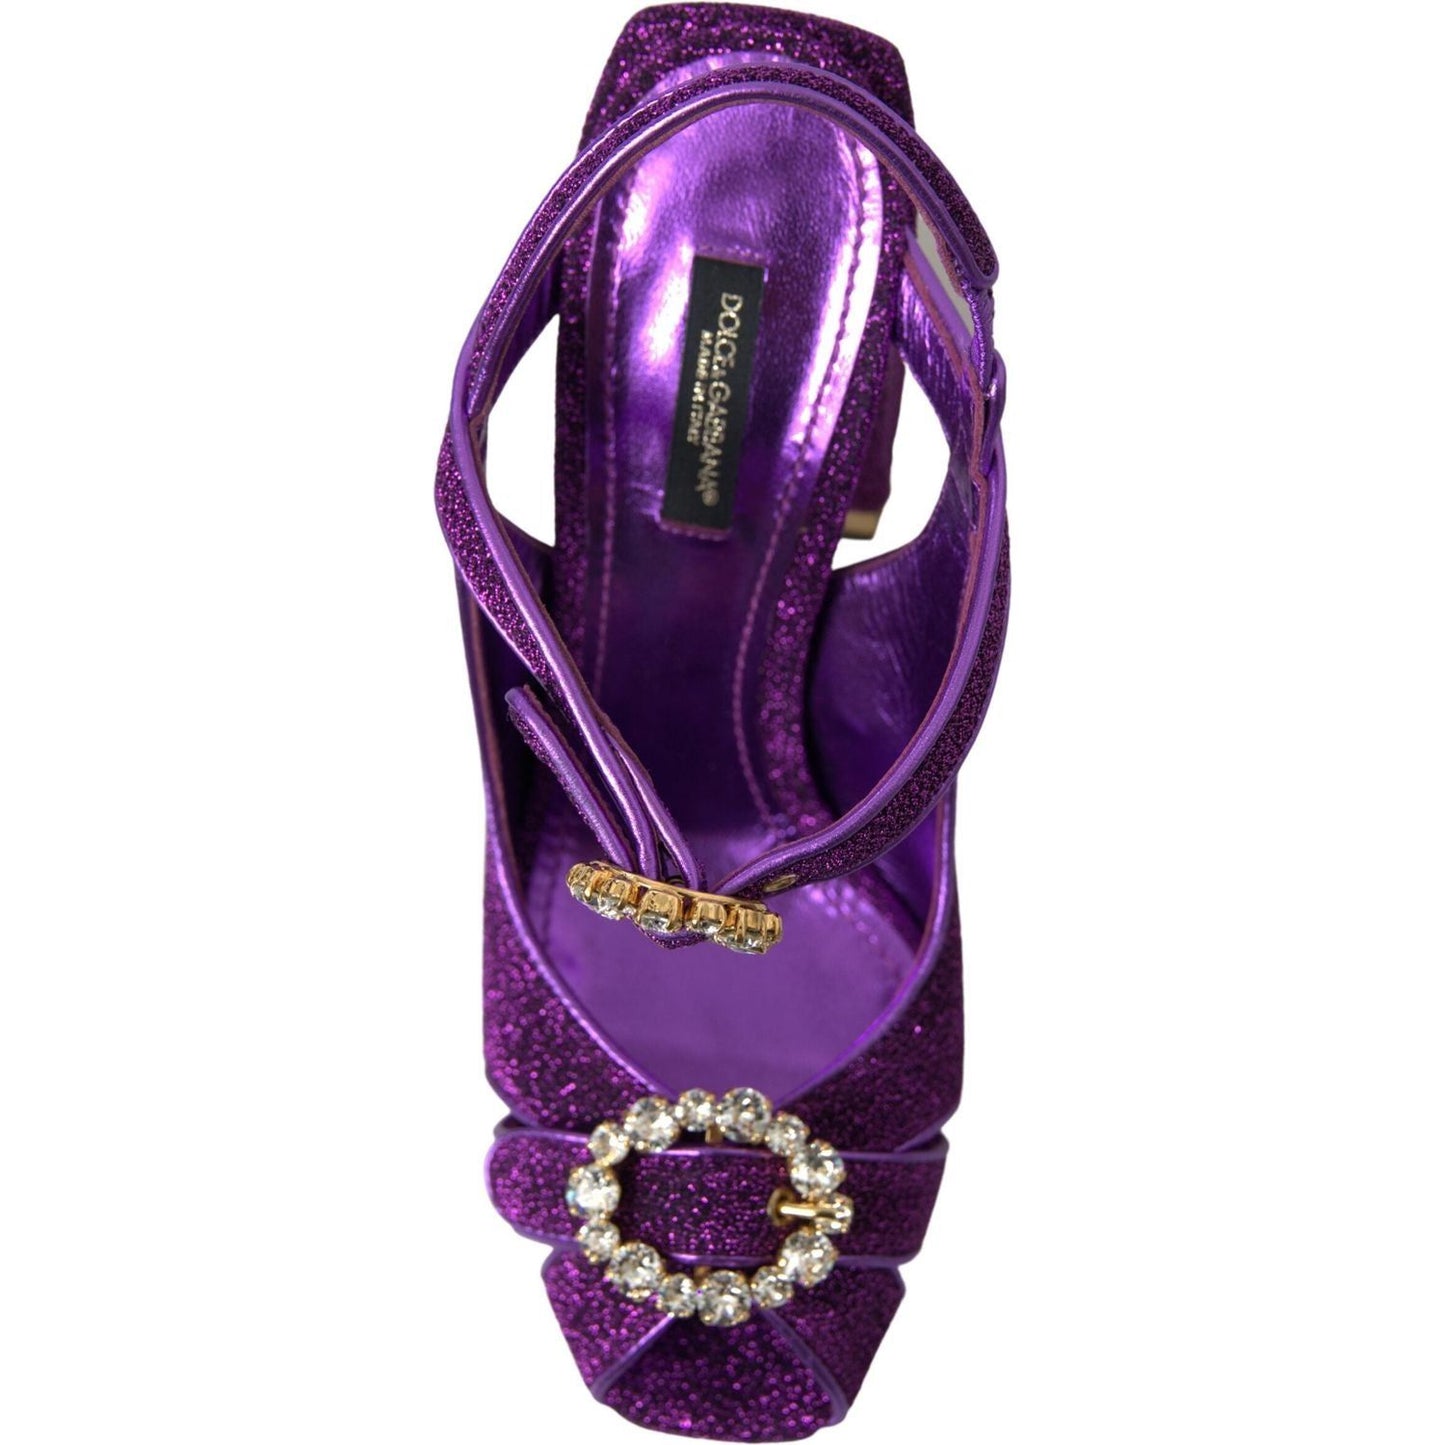 Dolce & Gabbana Elegant Purple Ankle Strap Heels purple-ankle-strap-sandals-crystal-shoes 465A0097-scaled-120491fb-5f3_af8c3b84-813a-40fb-aed6-af599ffe5b22.jpg